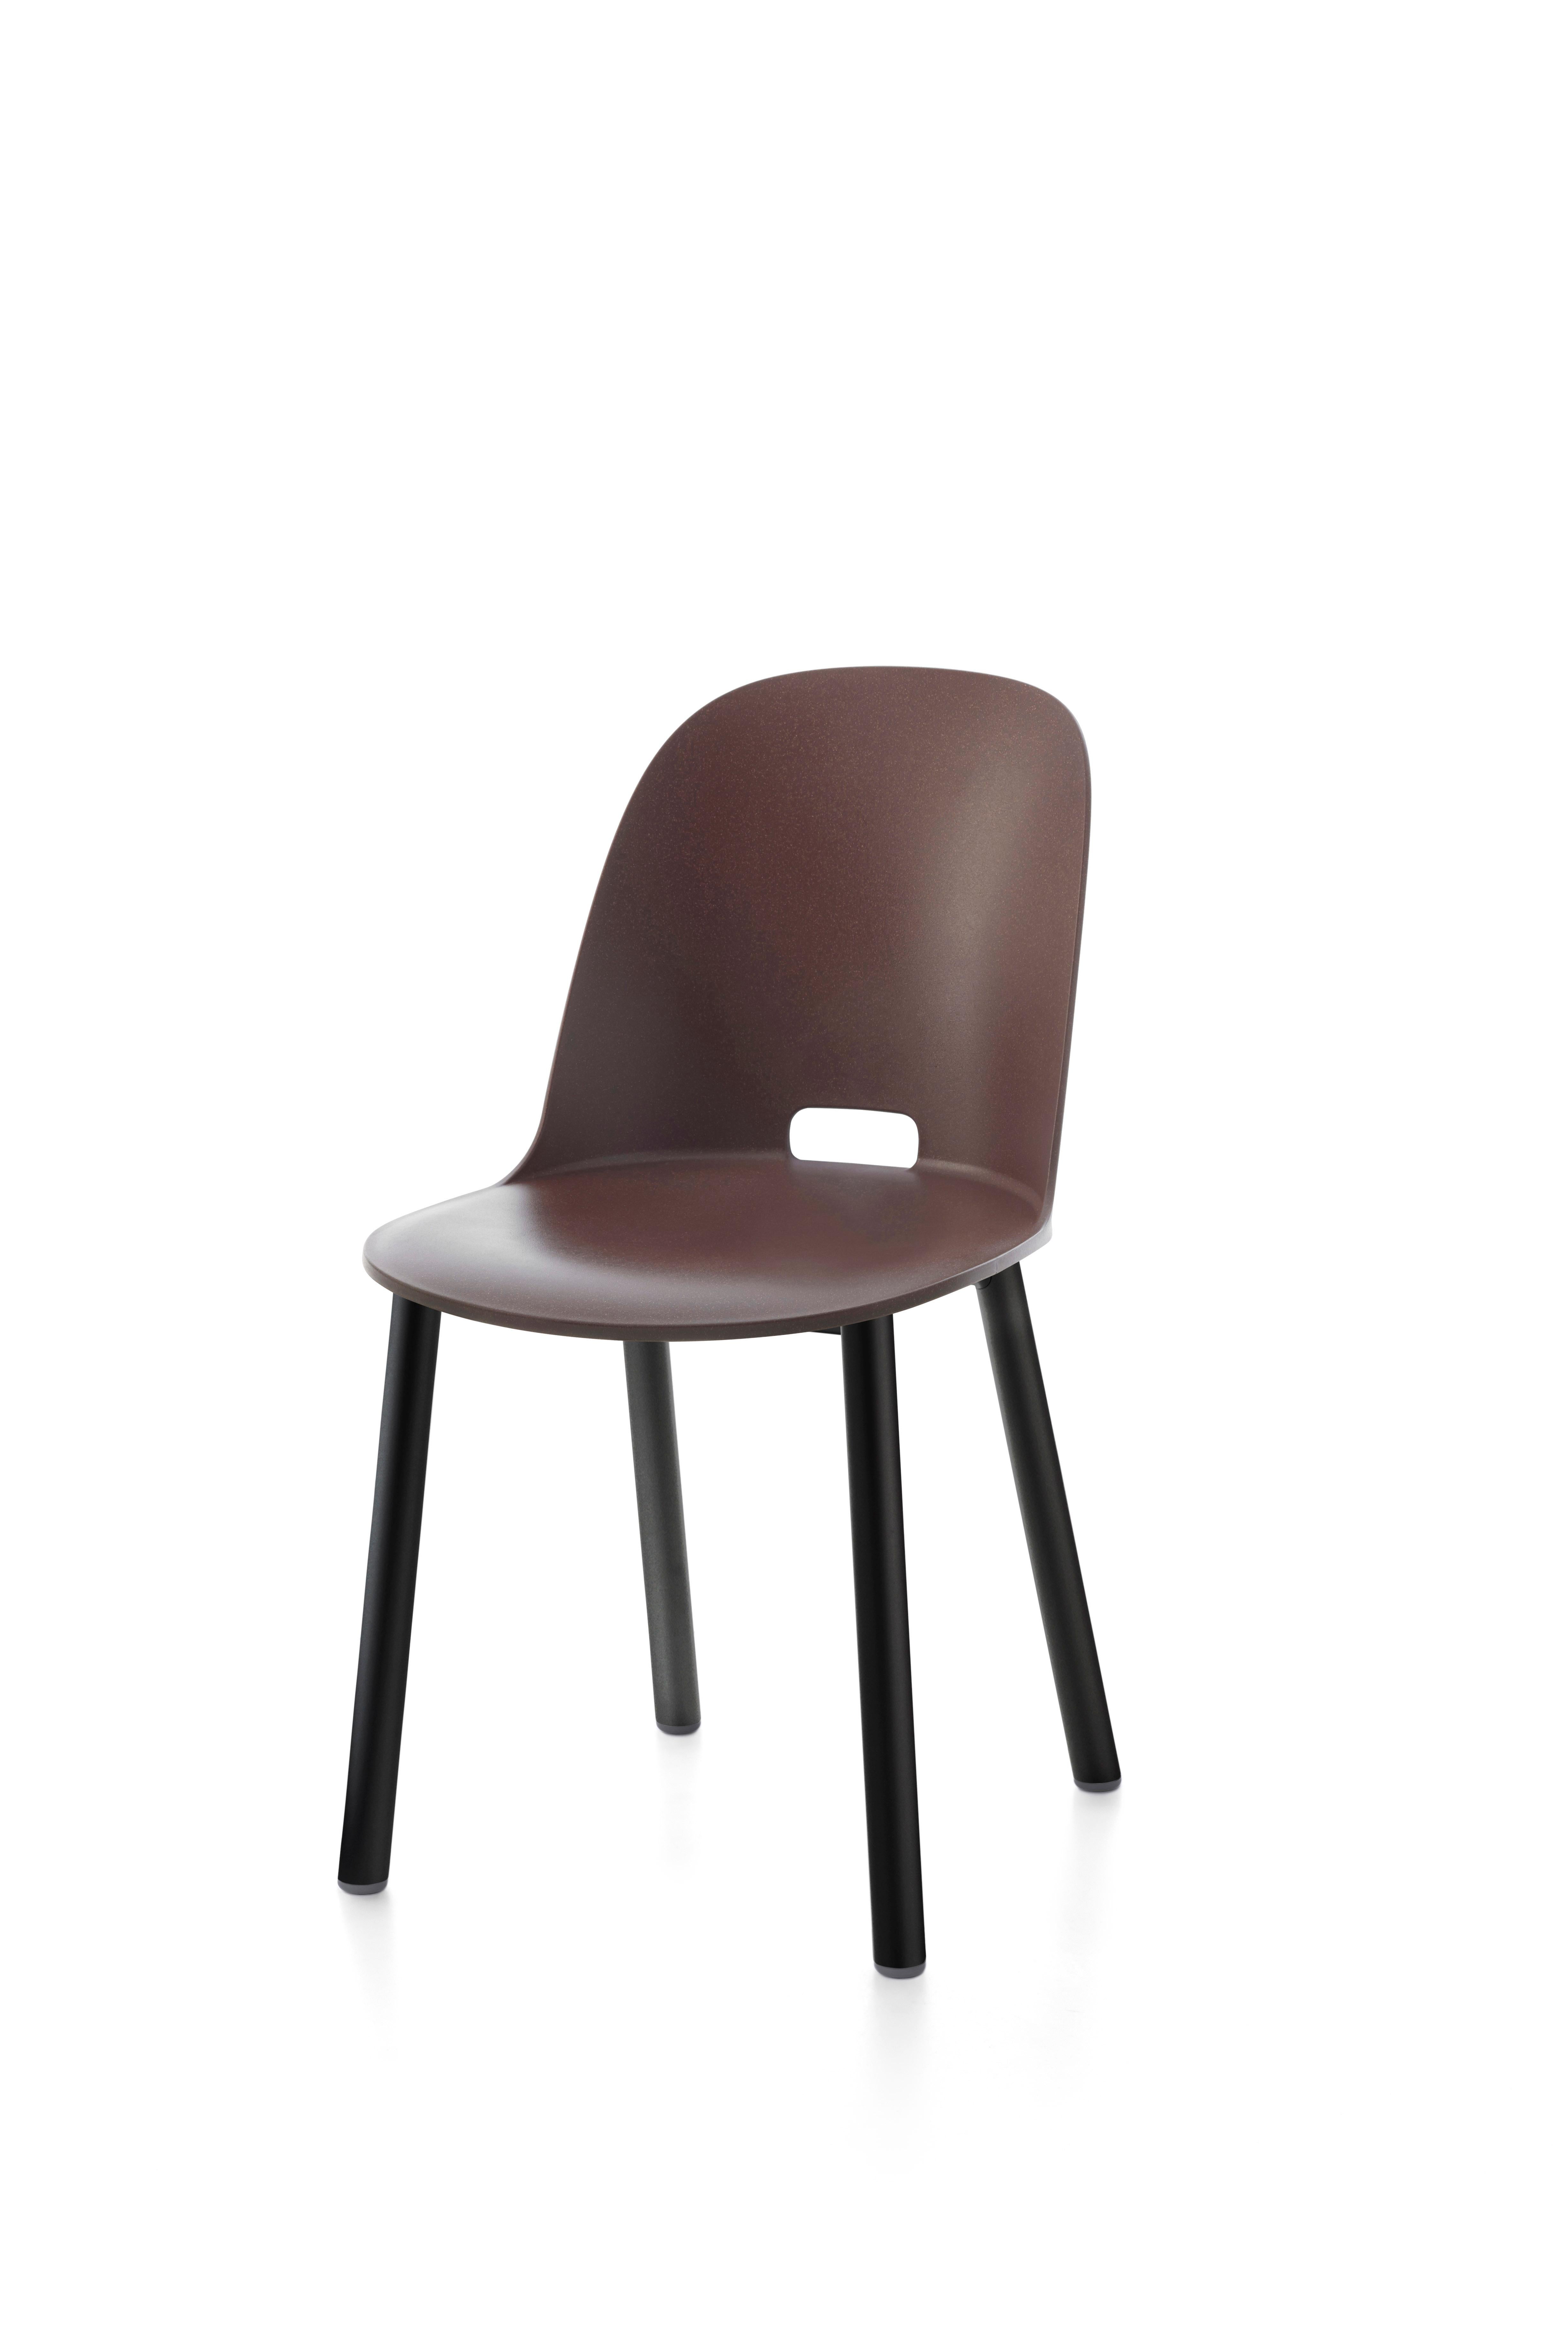 For Sale: Brown (Alfi Dark Brown) Emeco Alfi High Back Chair with Black Powder Coated Aluminum Frame by Jasper